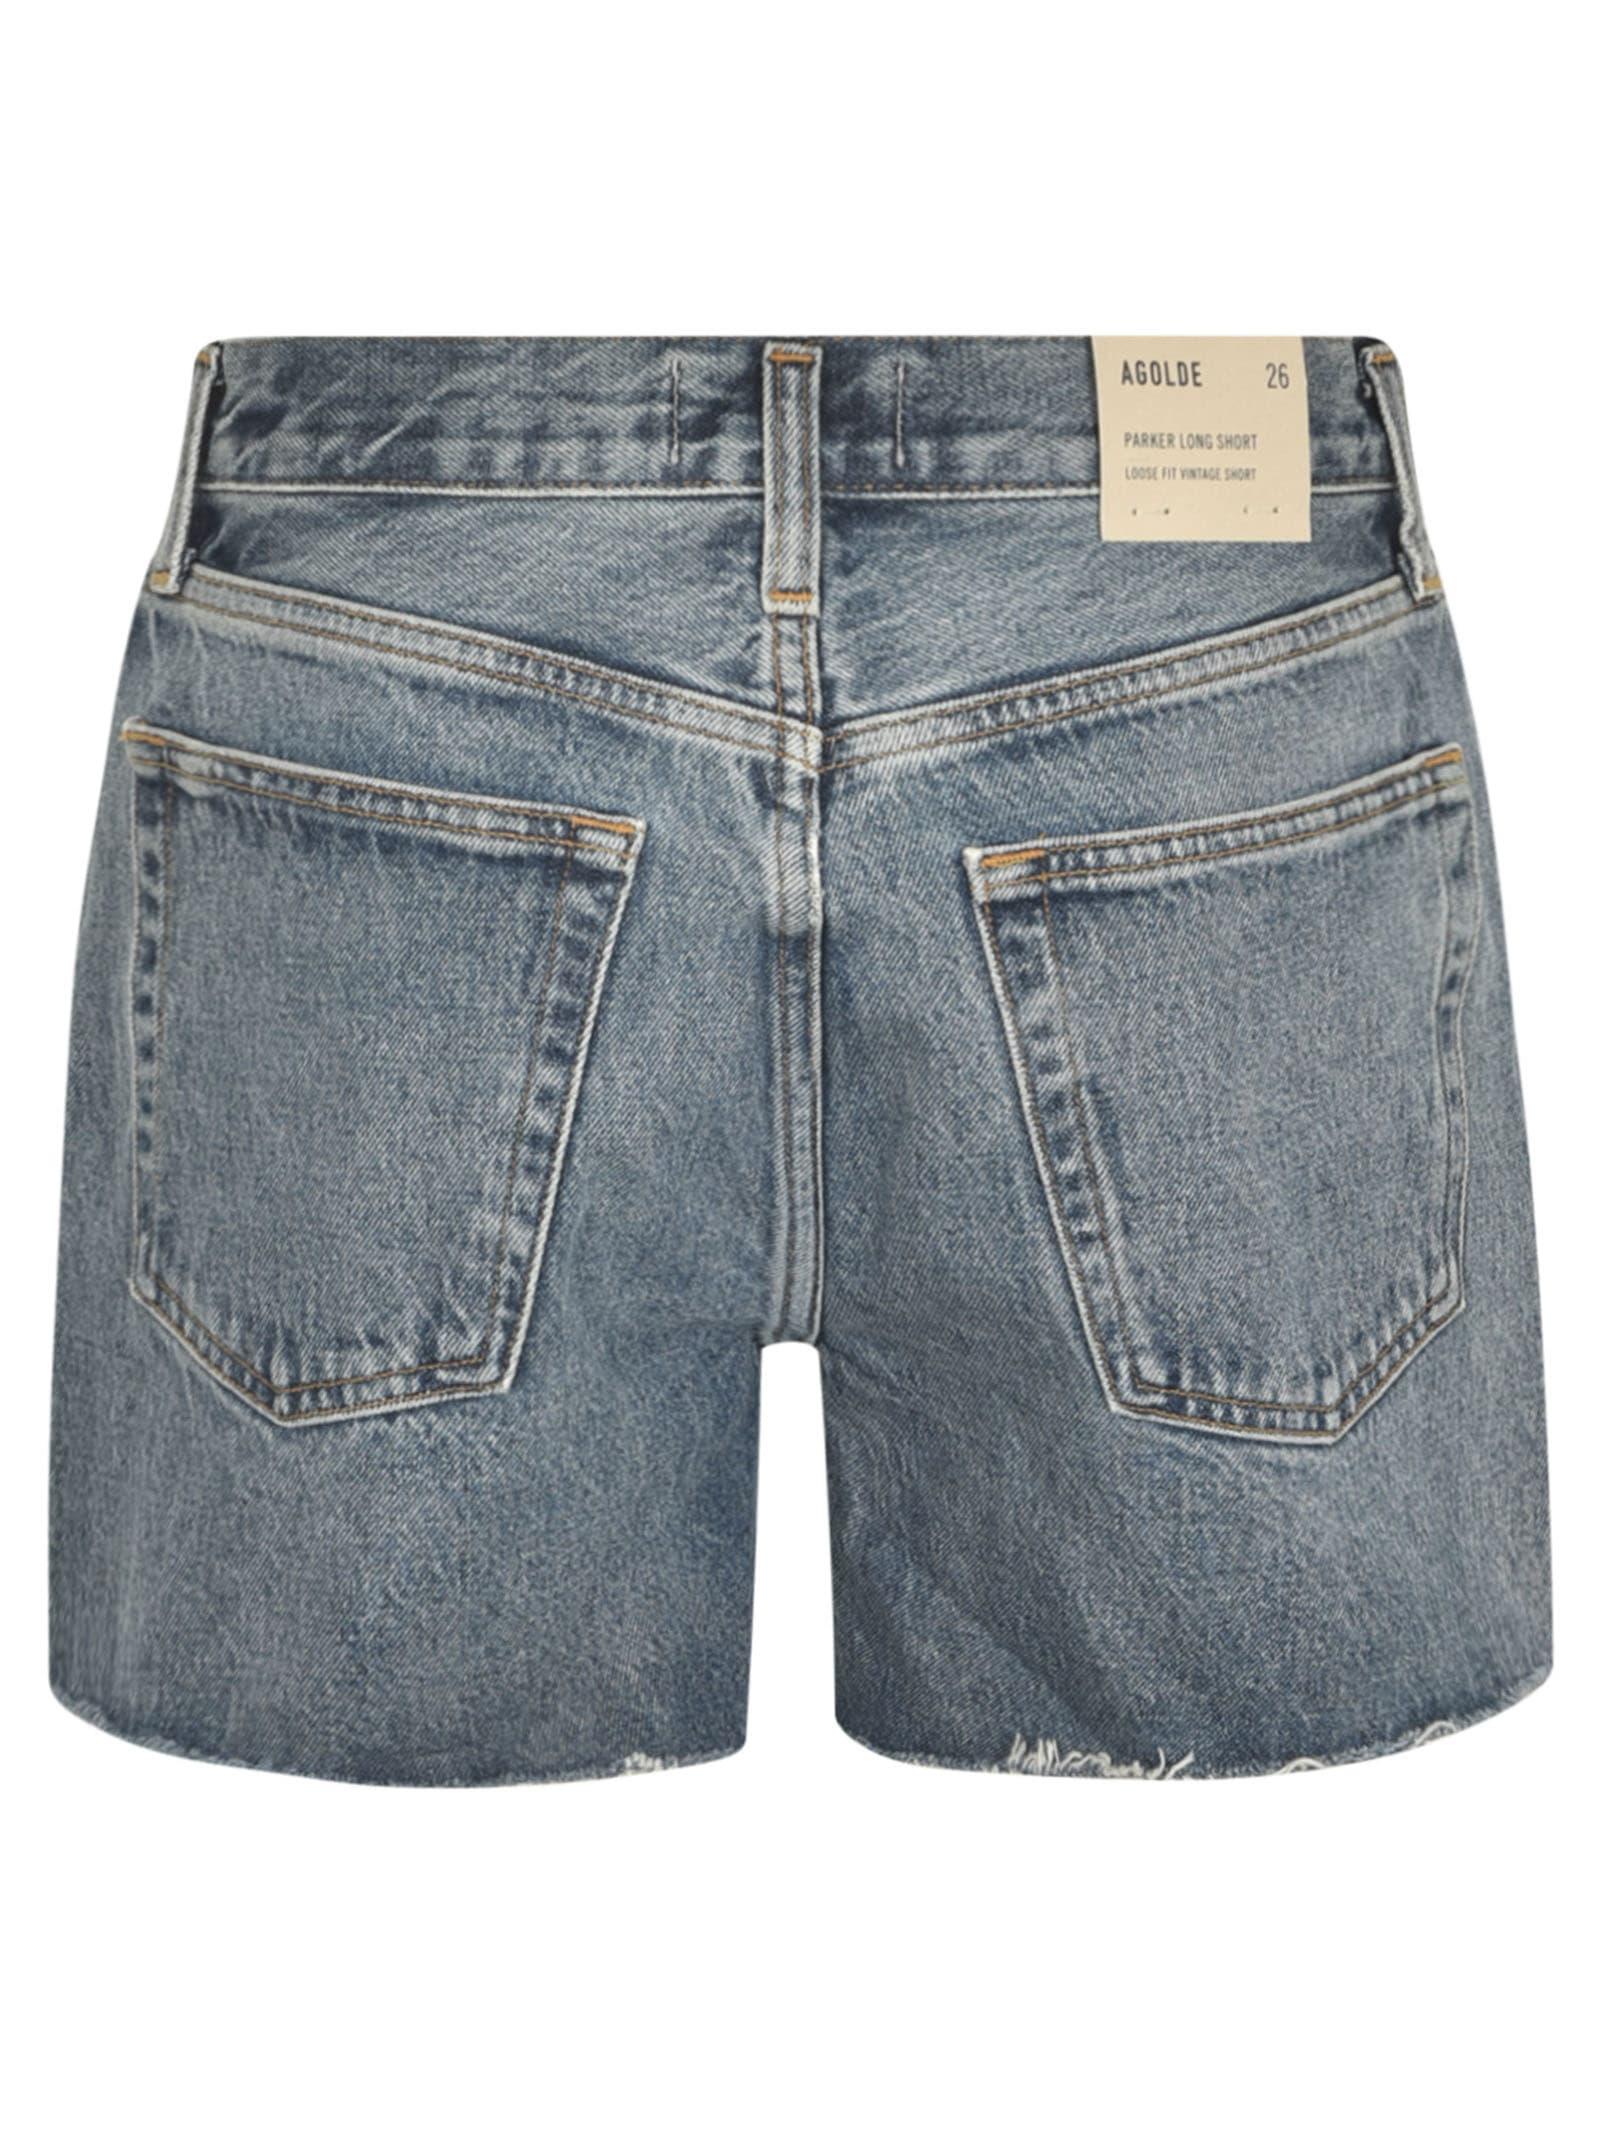 Agolde Distressed Denim Shorts in Blue